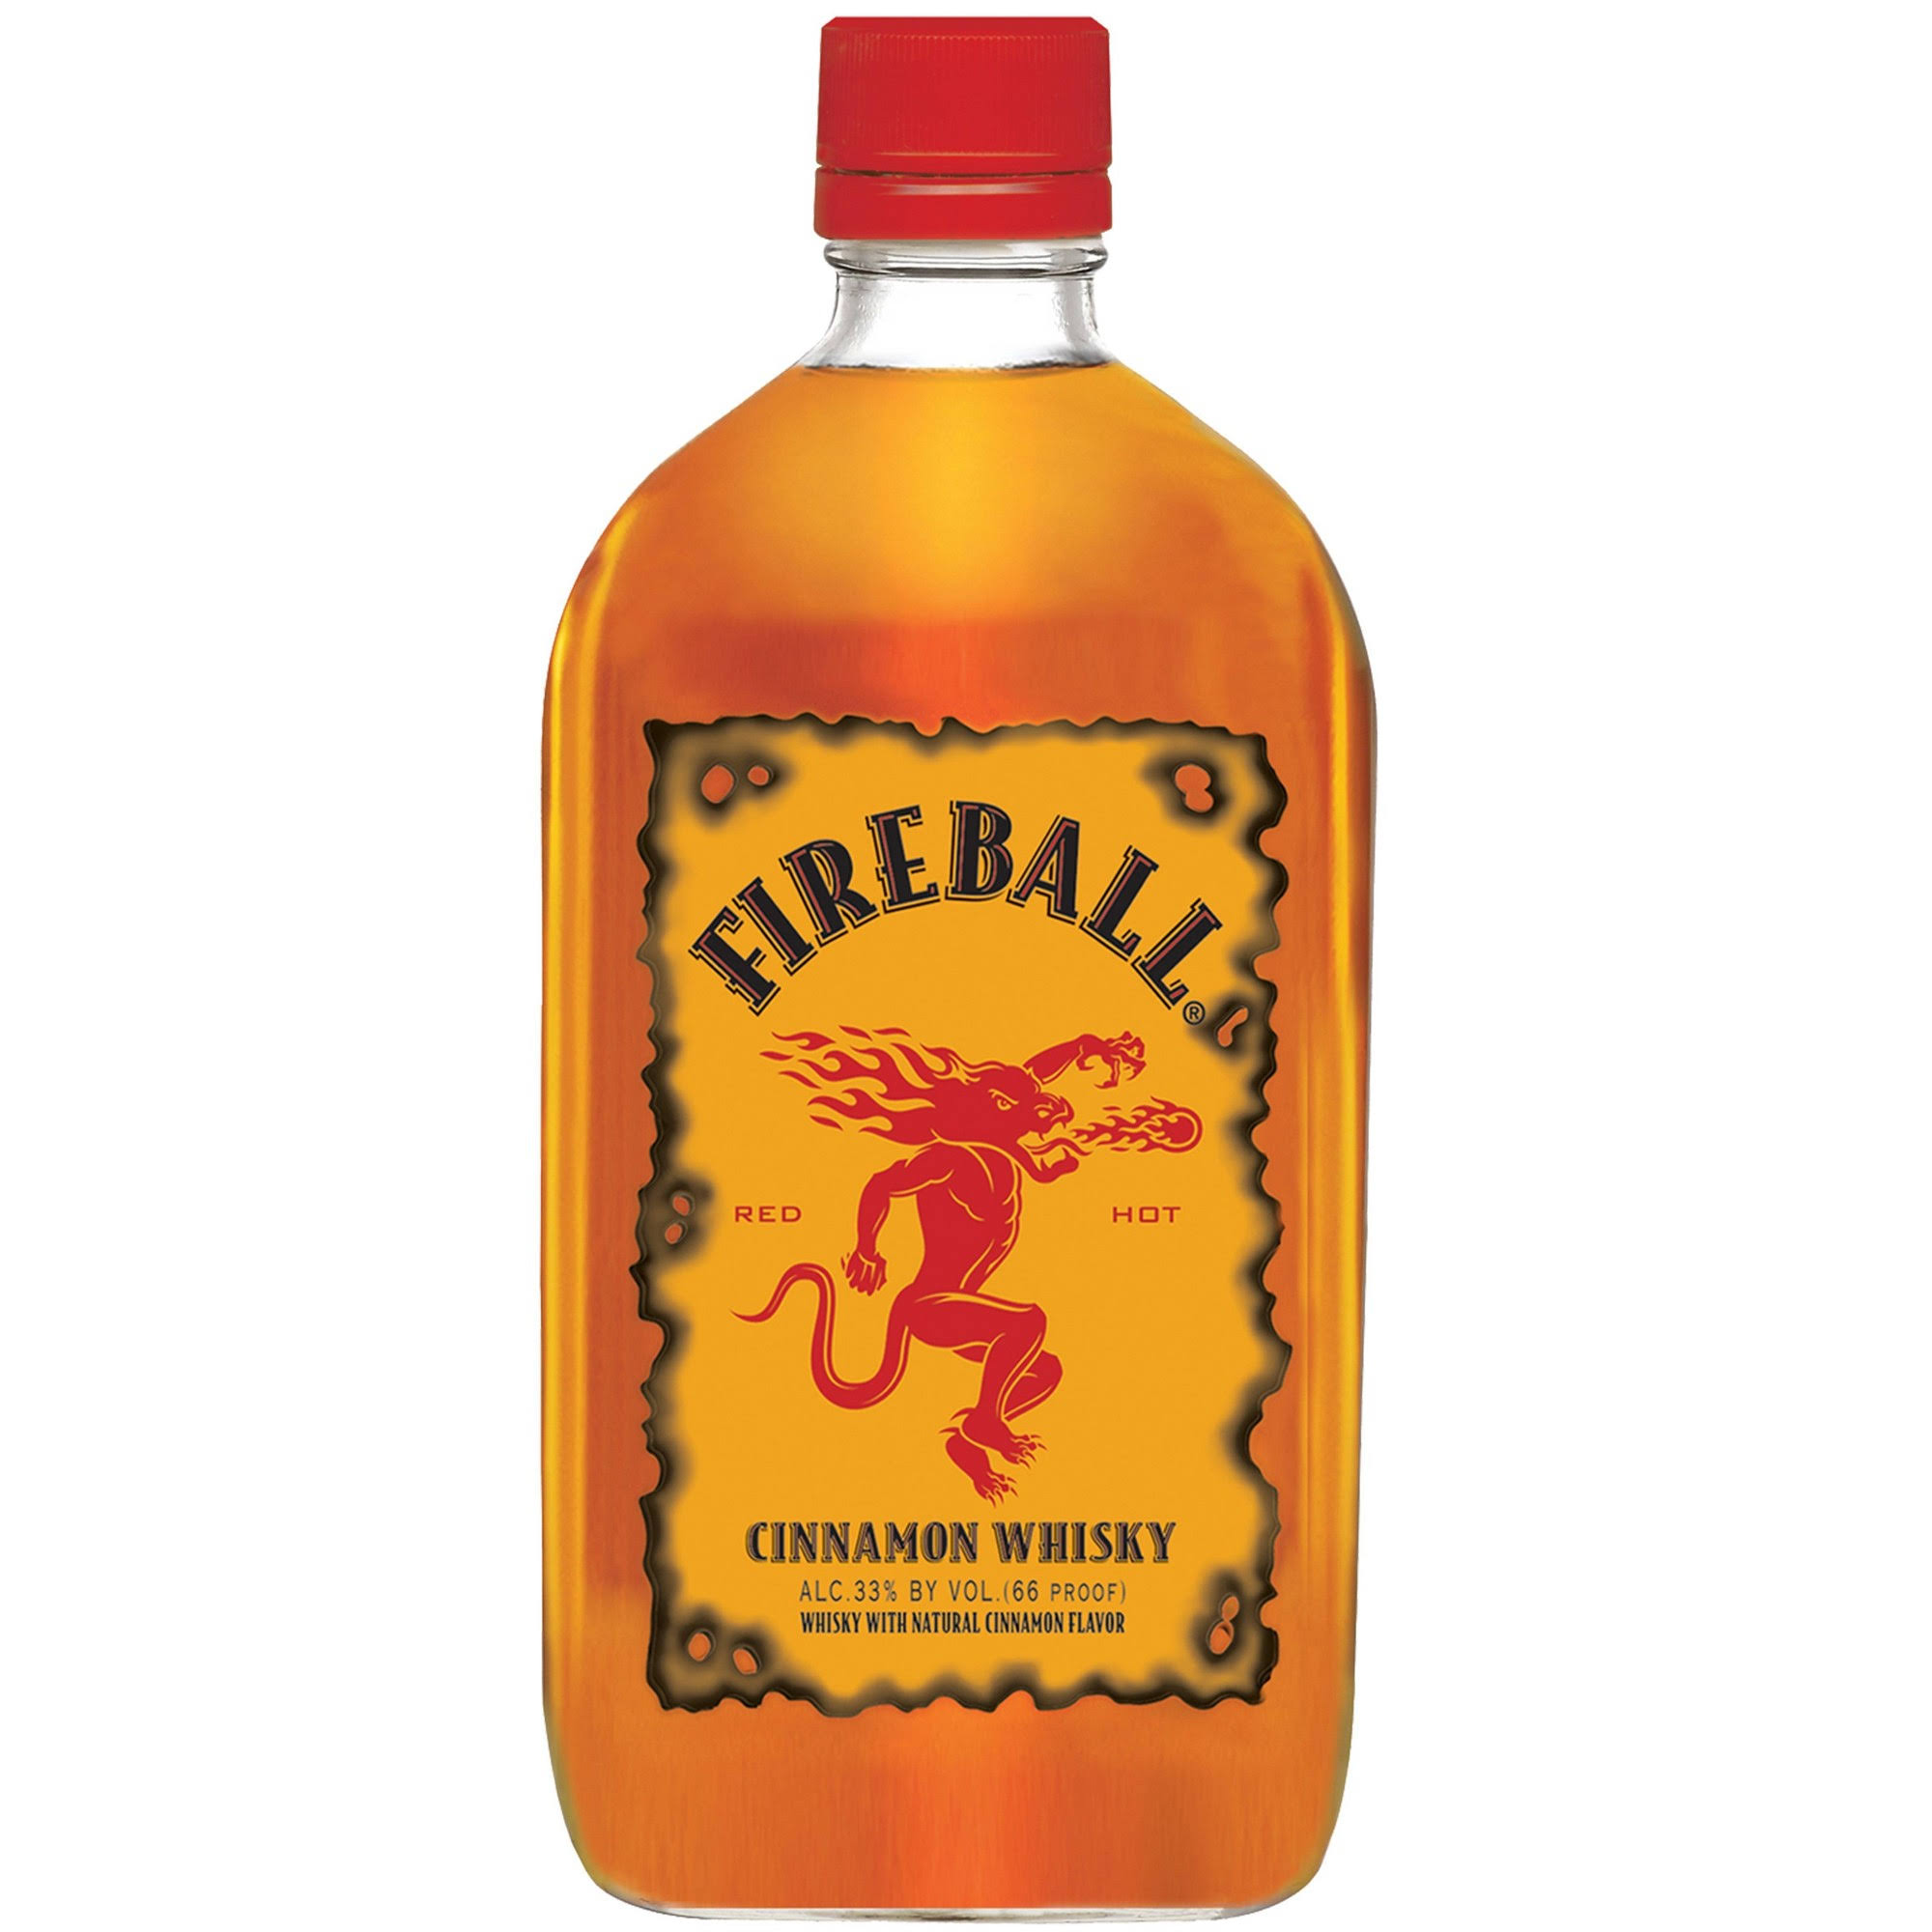 Fireball Whisky Cinnamon 375 ml